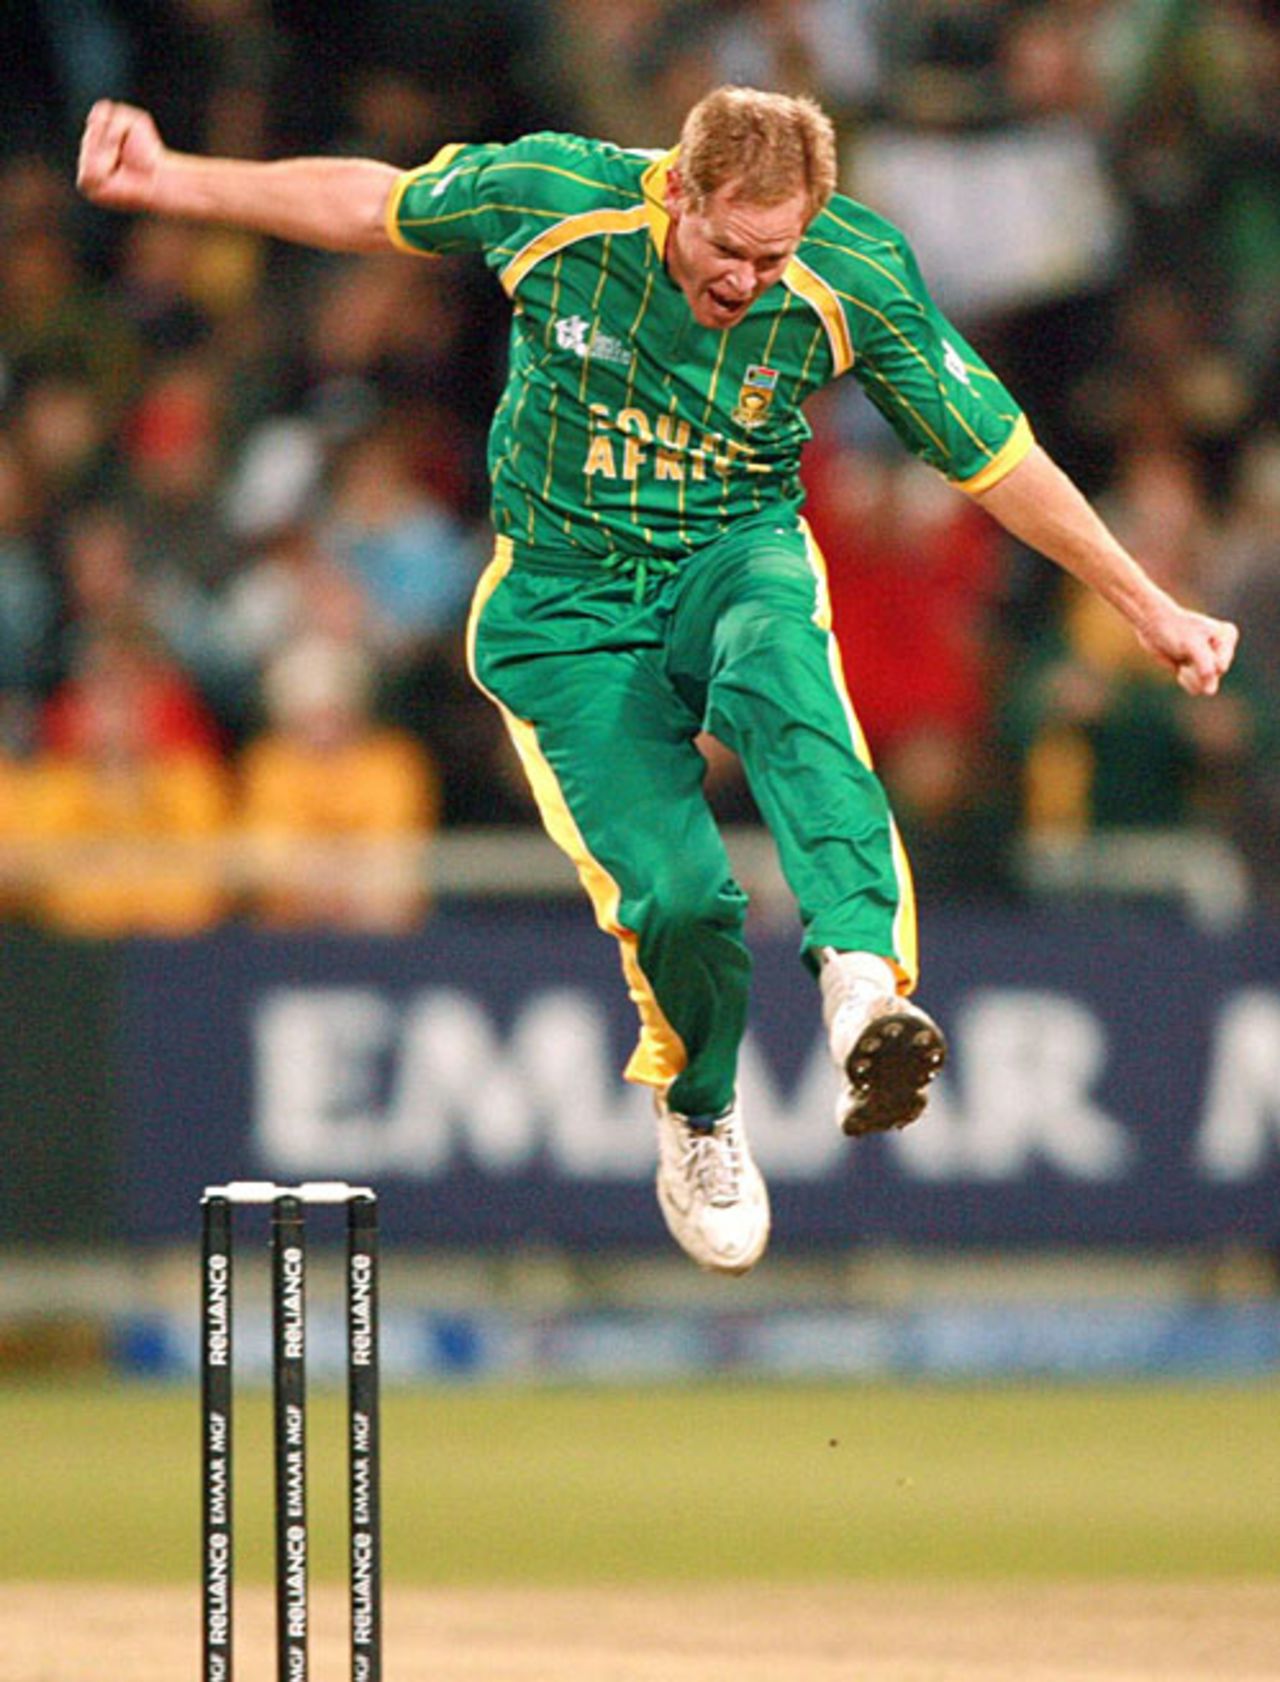 Shaun Pollock hurdles the stumps to celebrate his dismissal of Paul Collingwood, Group E, ICC World Twenty20, Cape Town, September 16, 2007